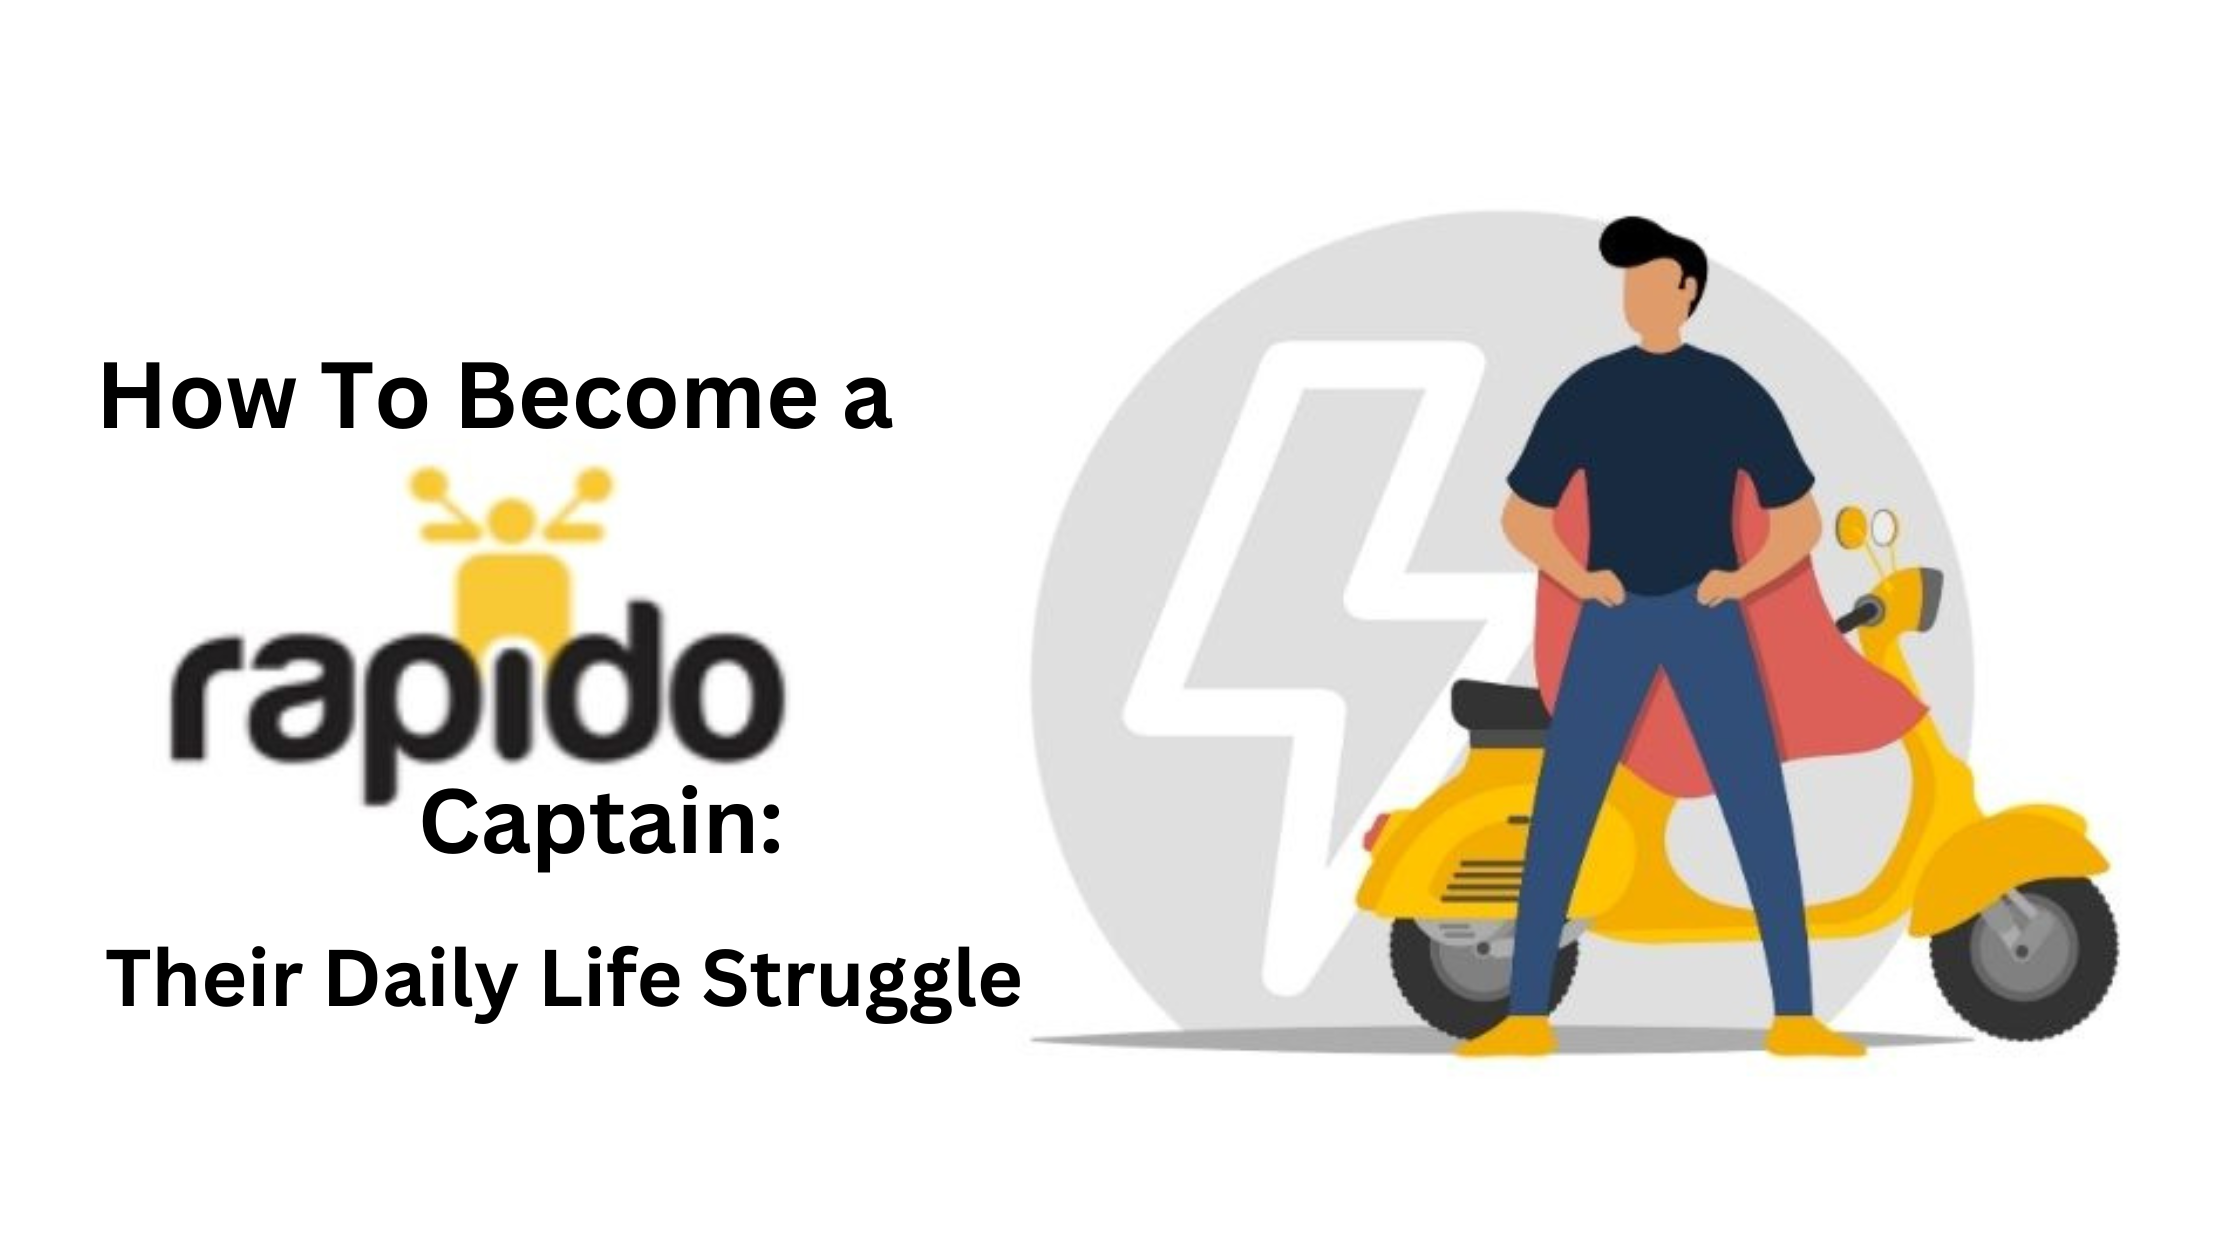 How To Become a Rapido Captain: Their Daily Life Struggle